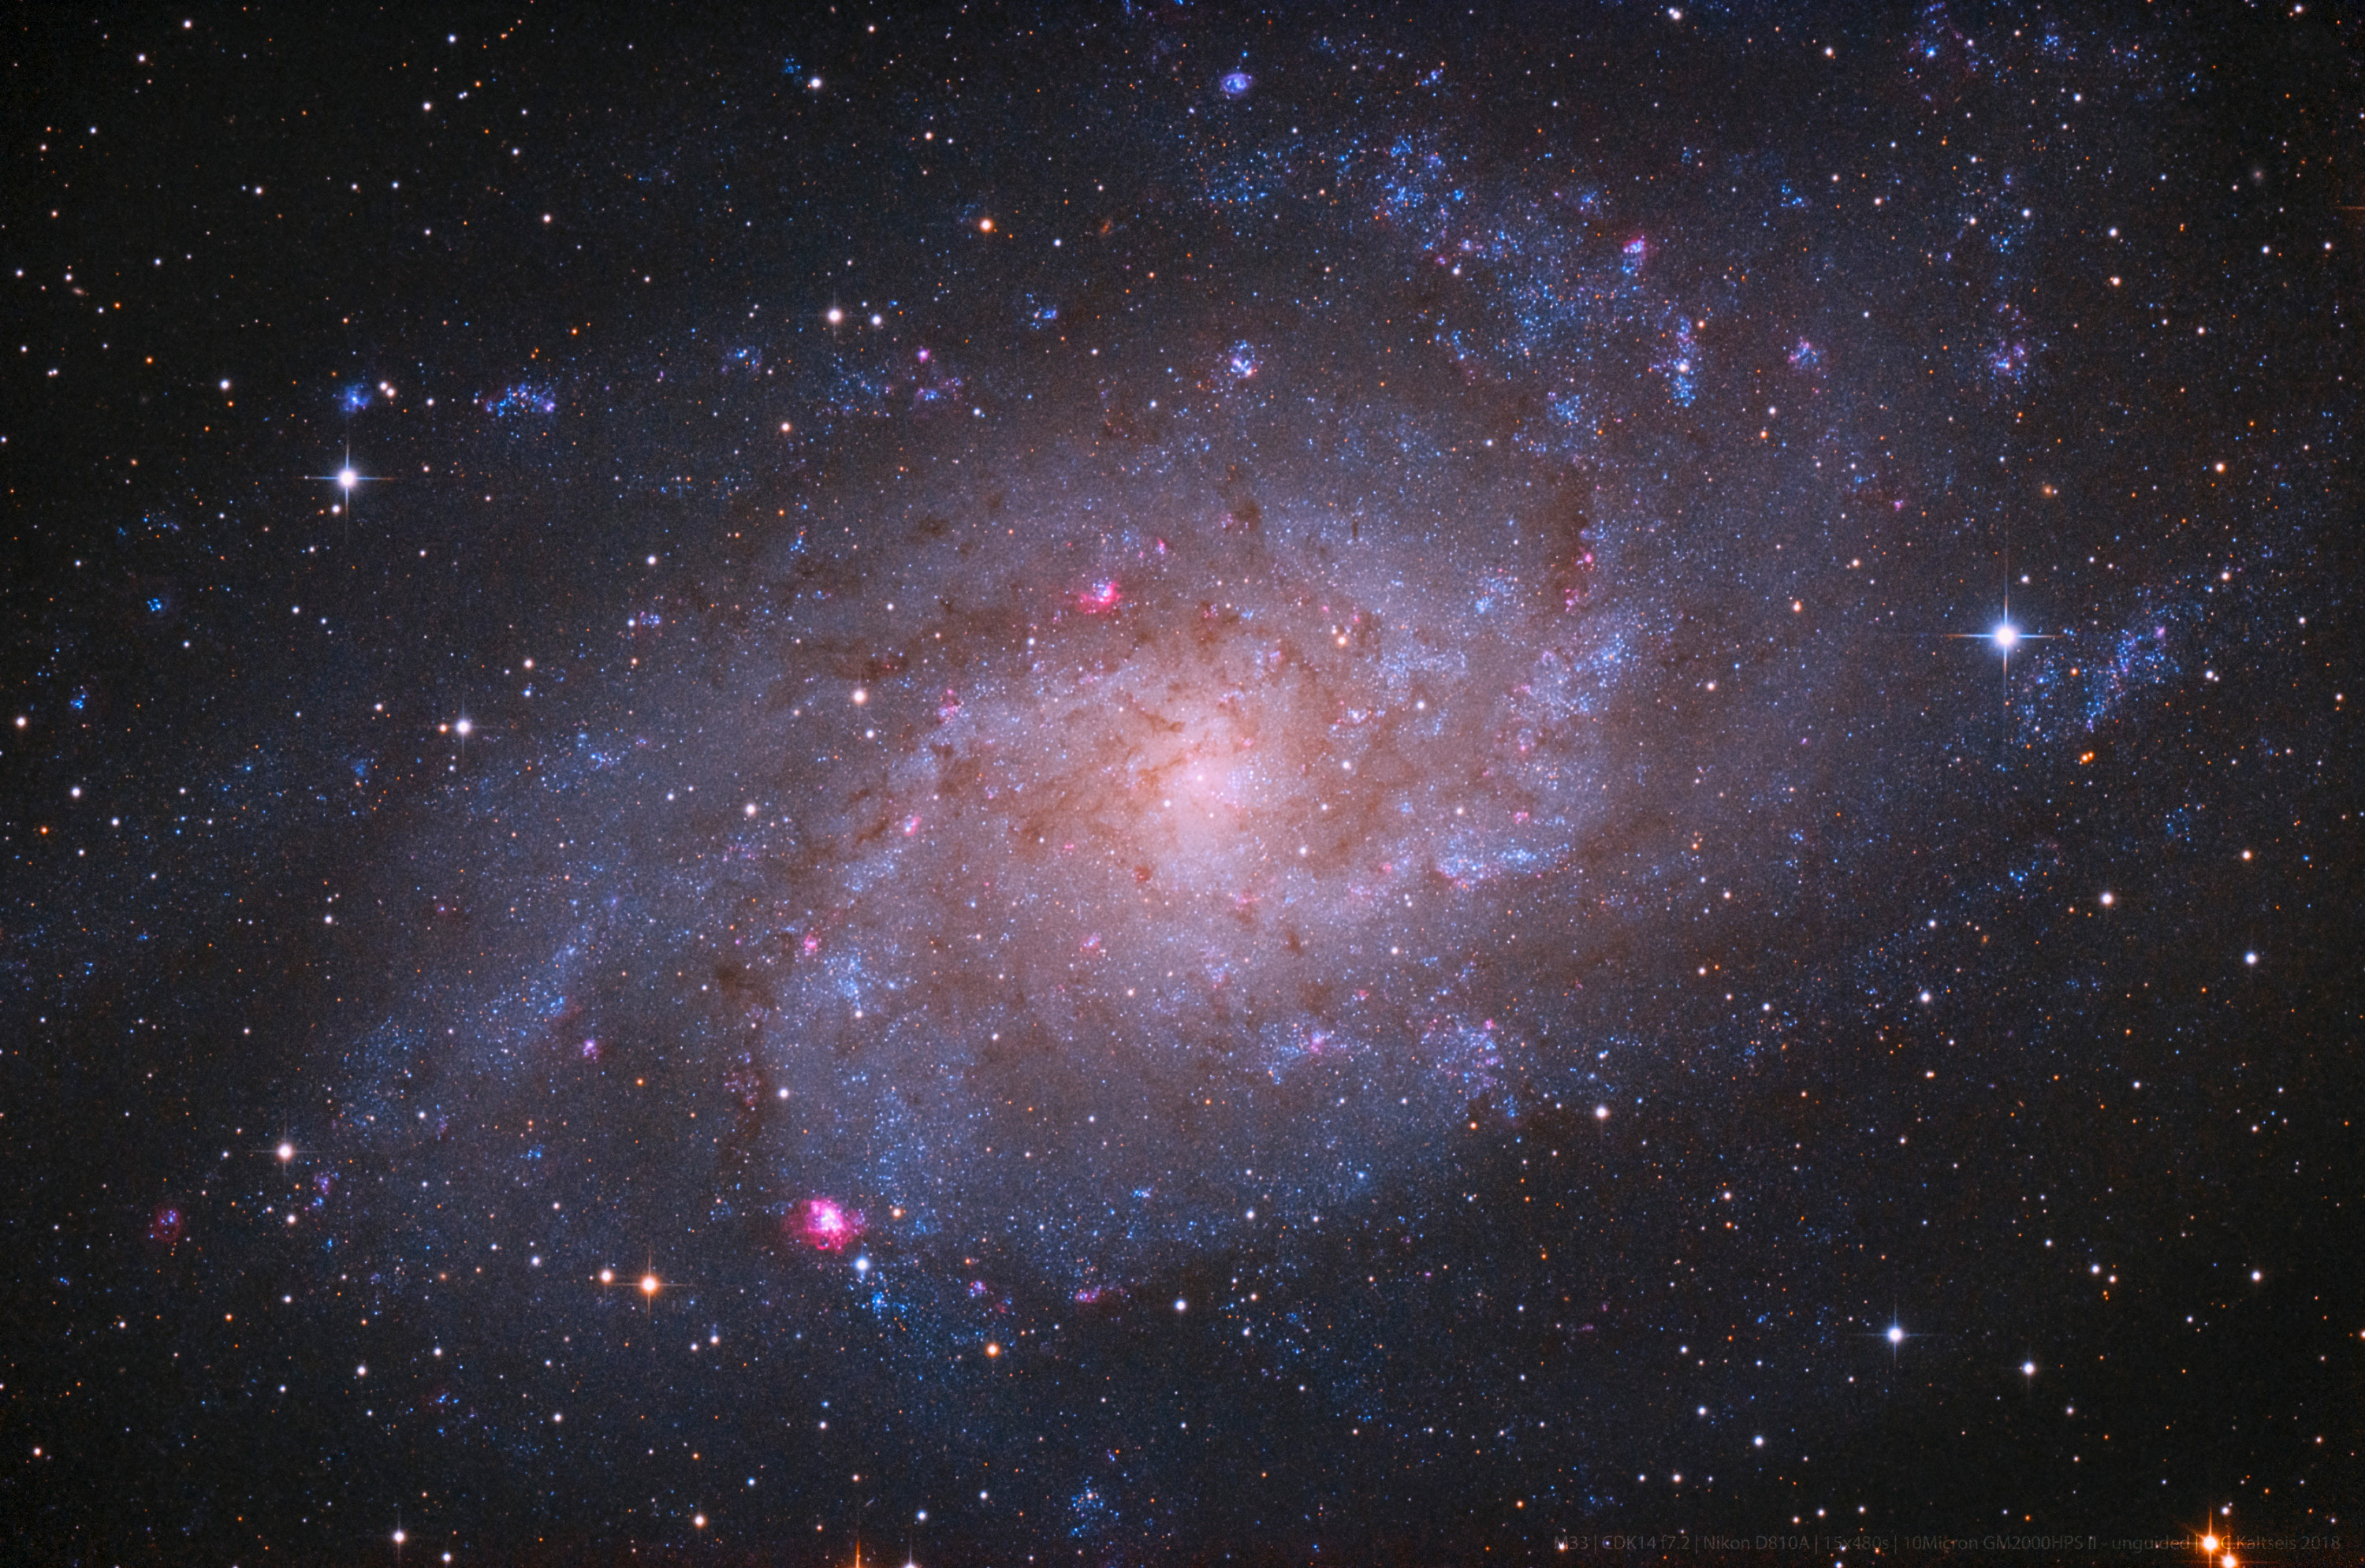 M33, la galaxie du Triangle